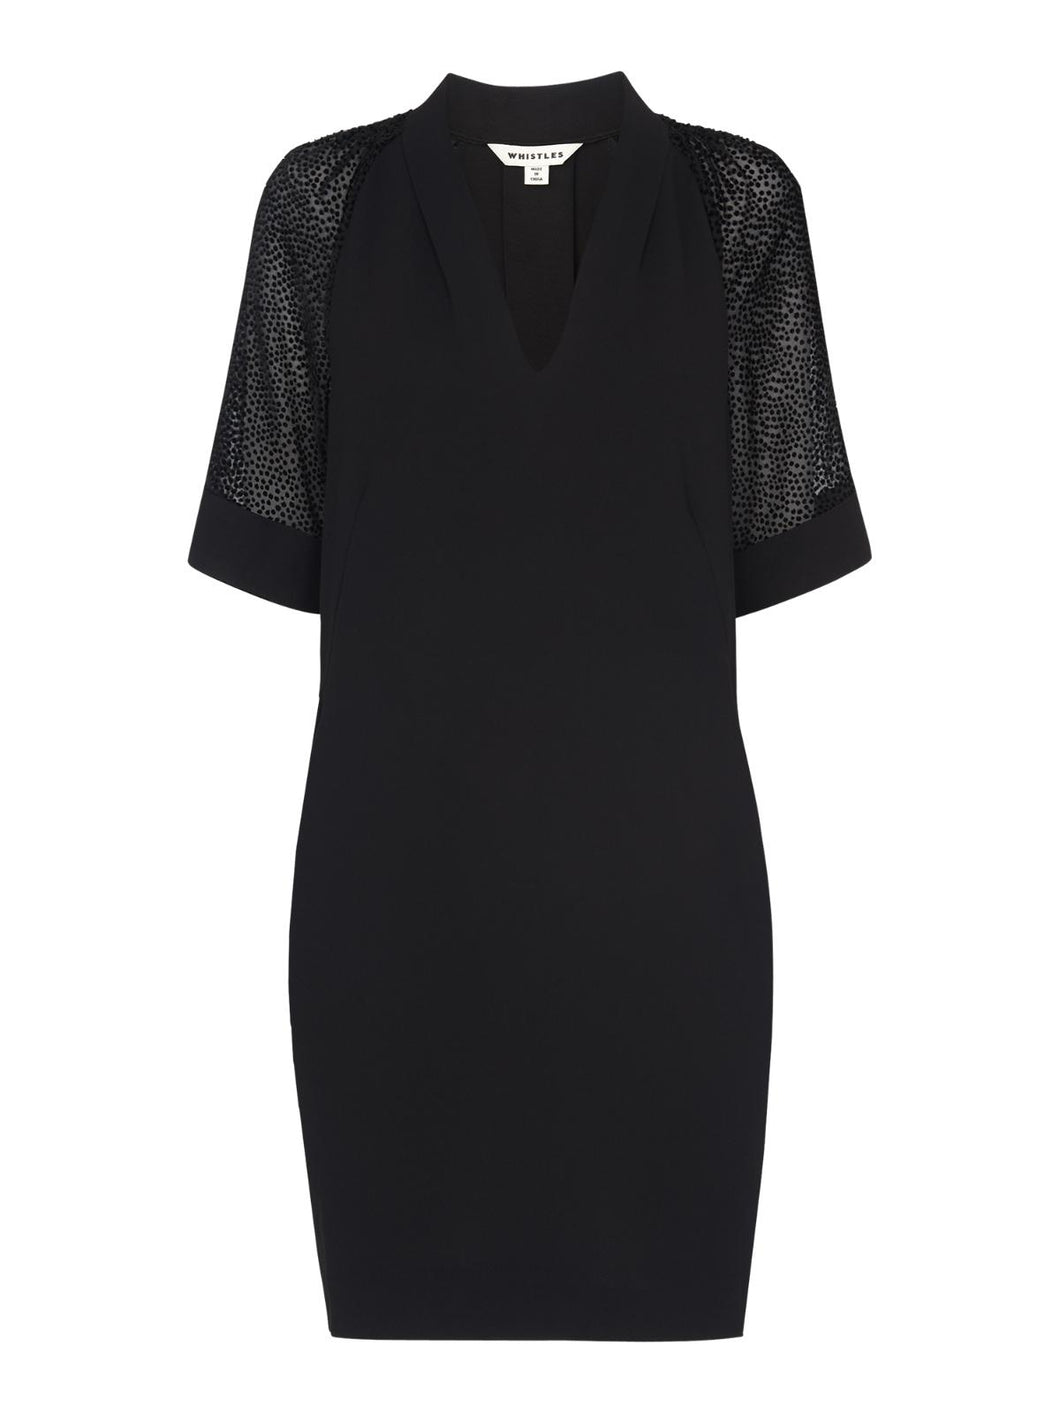 WHISTLES Lina Dobby Sleeve Dress Black Short Sleeve V-neck UK6 RRP139 BNWT